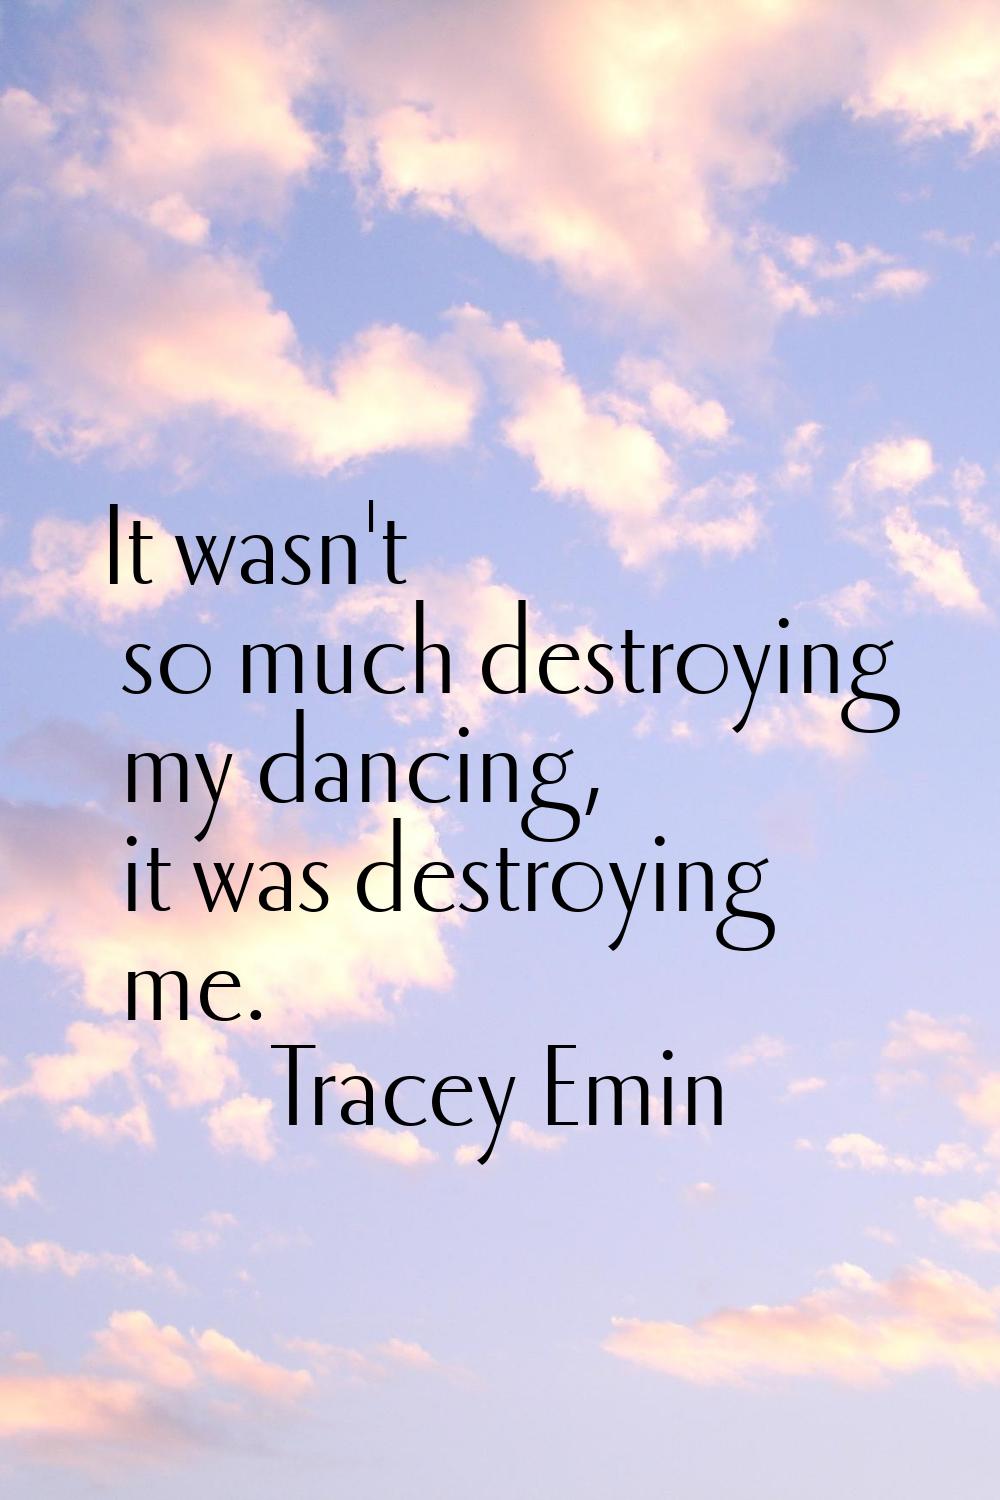 It wasn't so much destroying my dancing, it was destroying me.